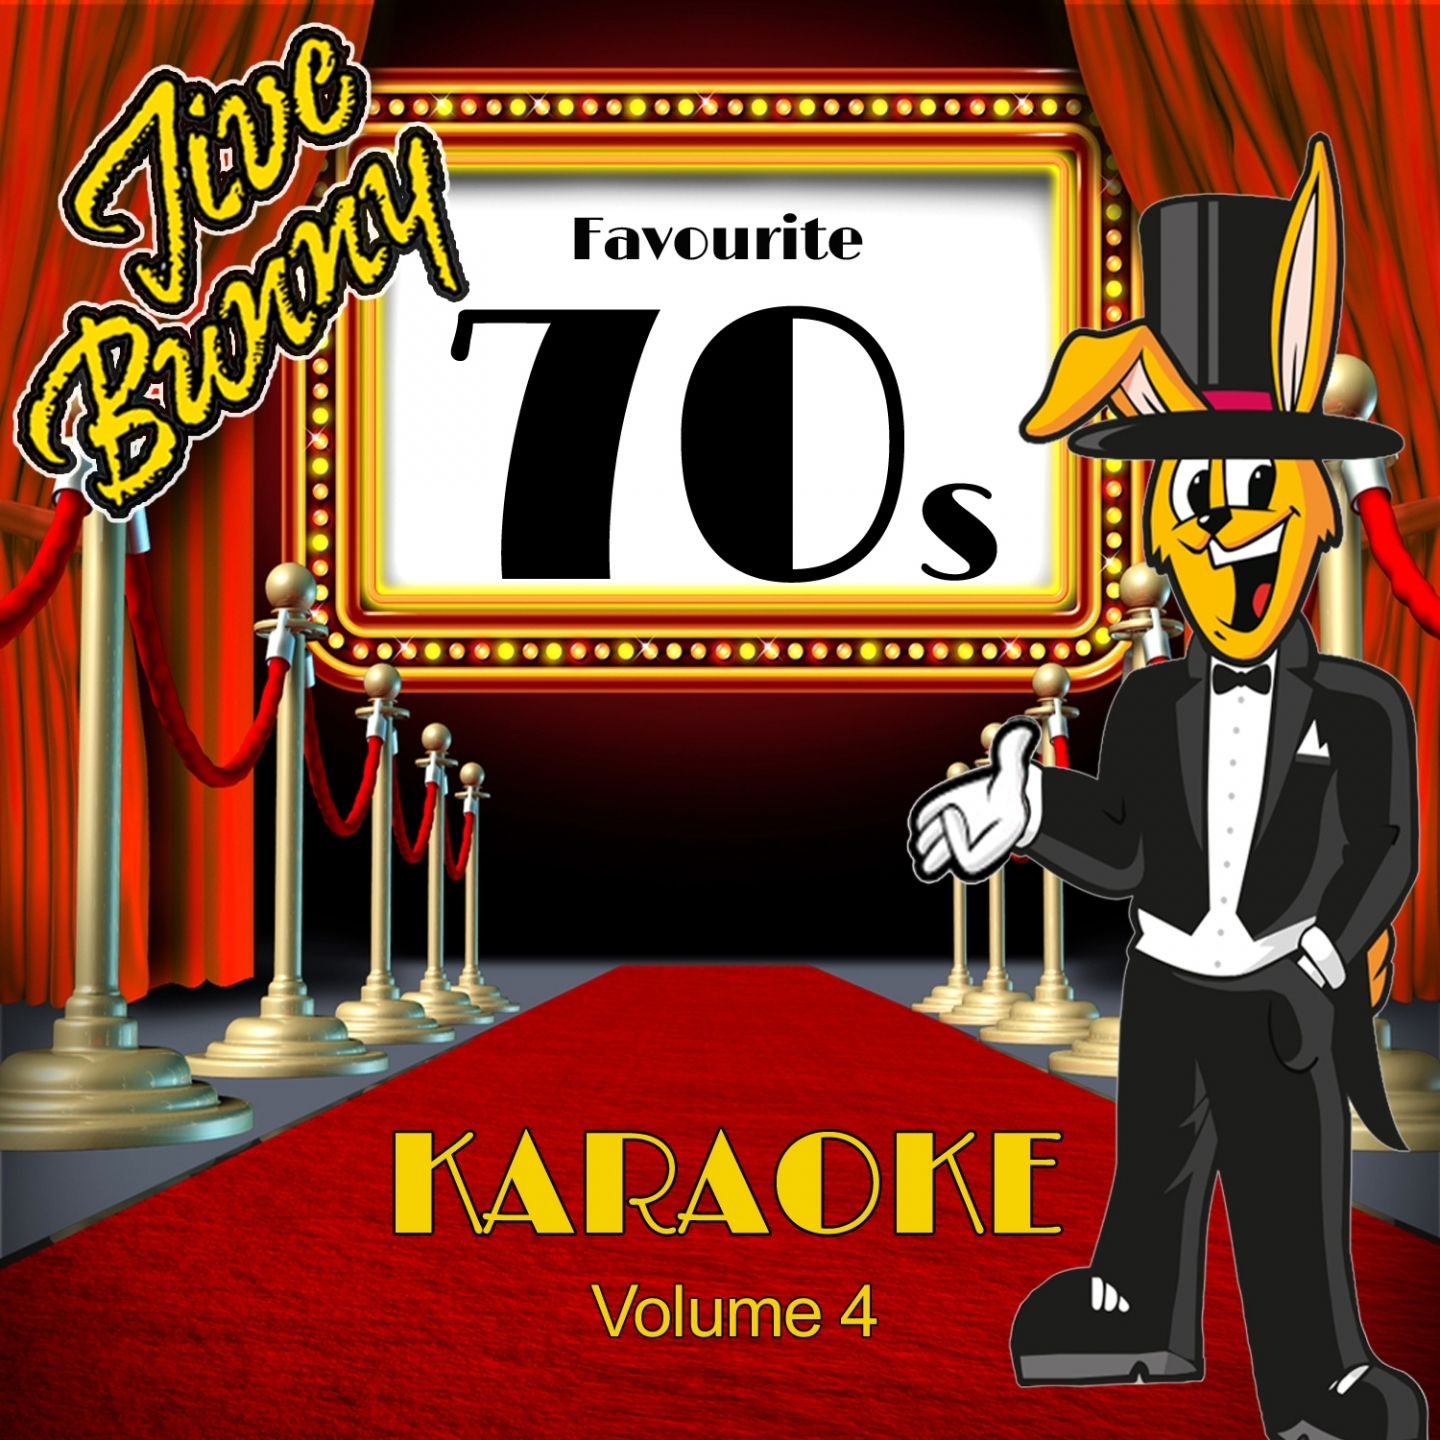 Jive Bunny's Favourite 70's Album - Karaoke, Vol. 4